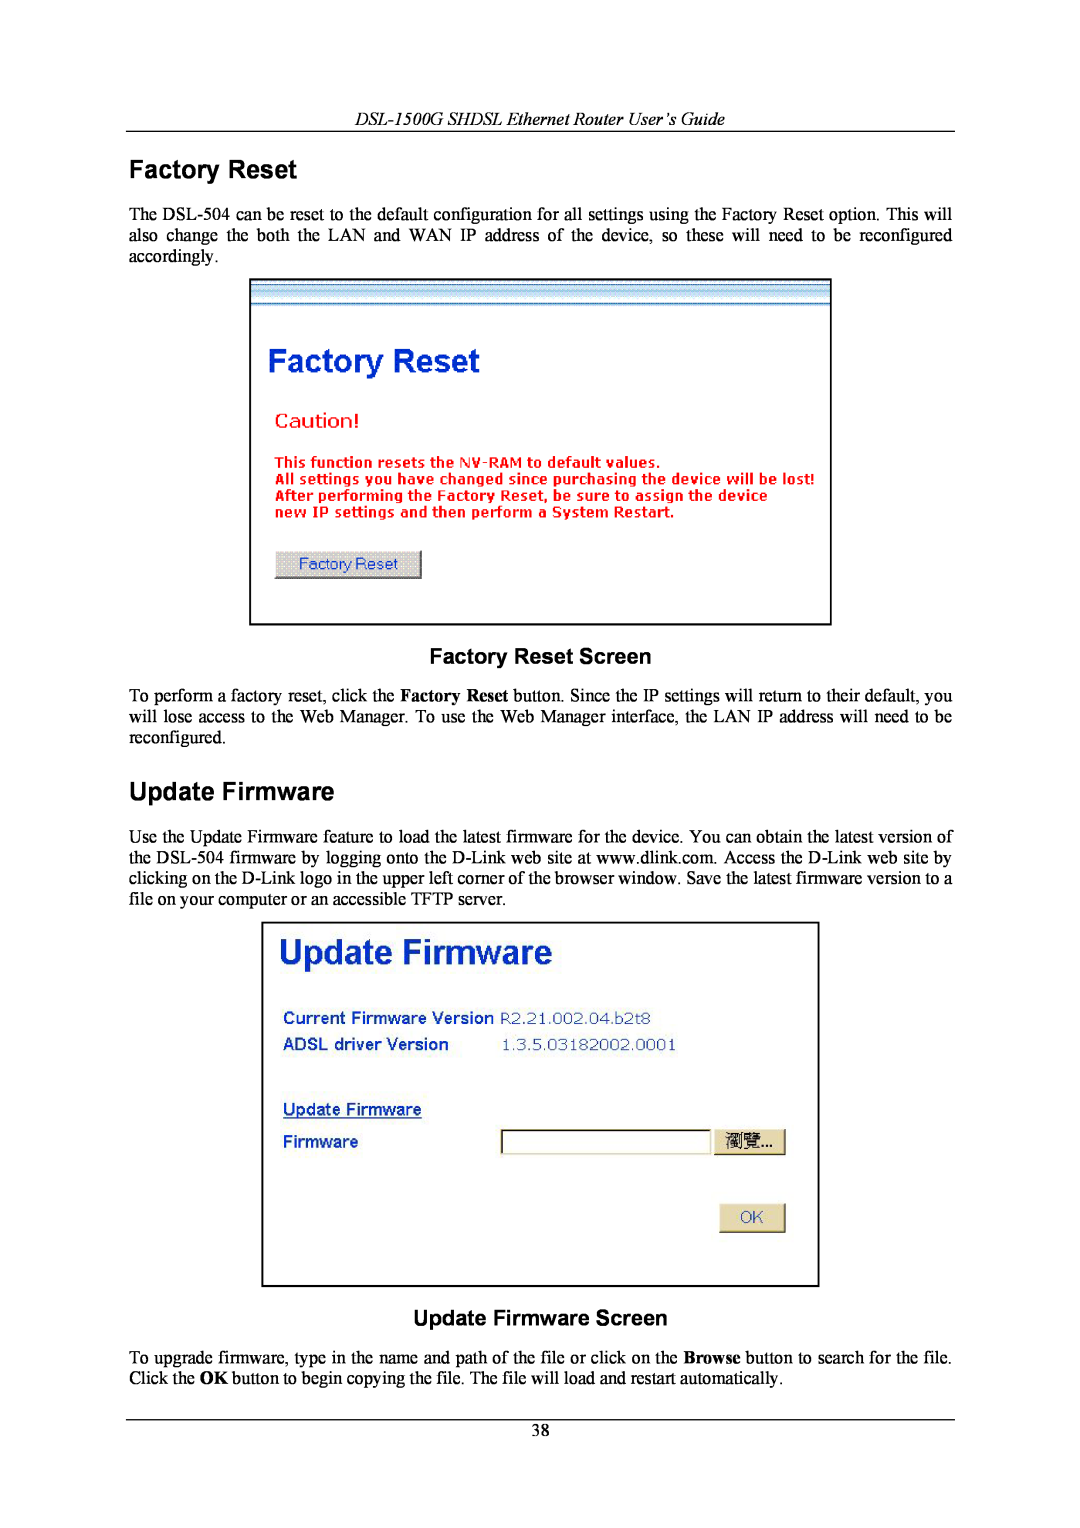 D-Link manual Factory Reset Screen, Update Firmware Screen, DSL-1500G SHDSL Ethernet Router User’s Guide 